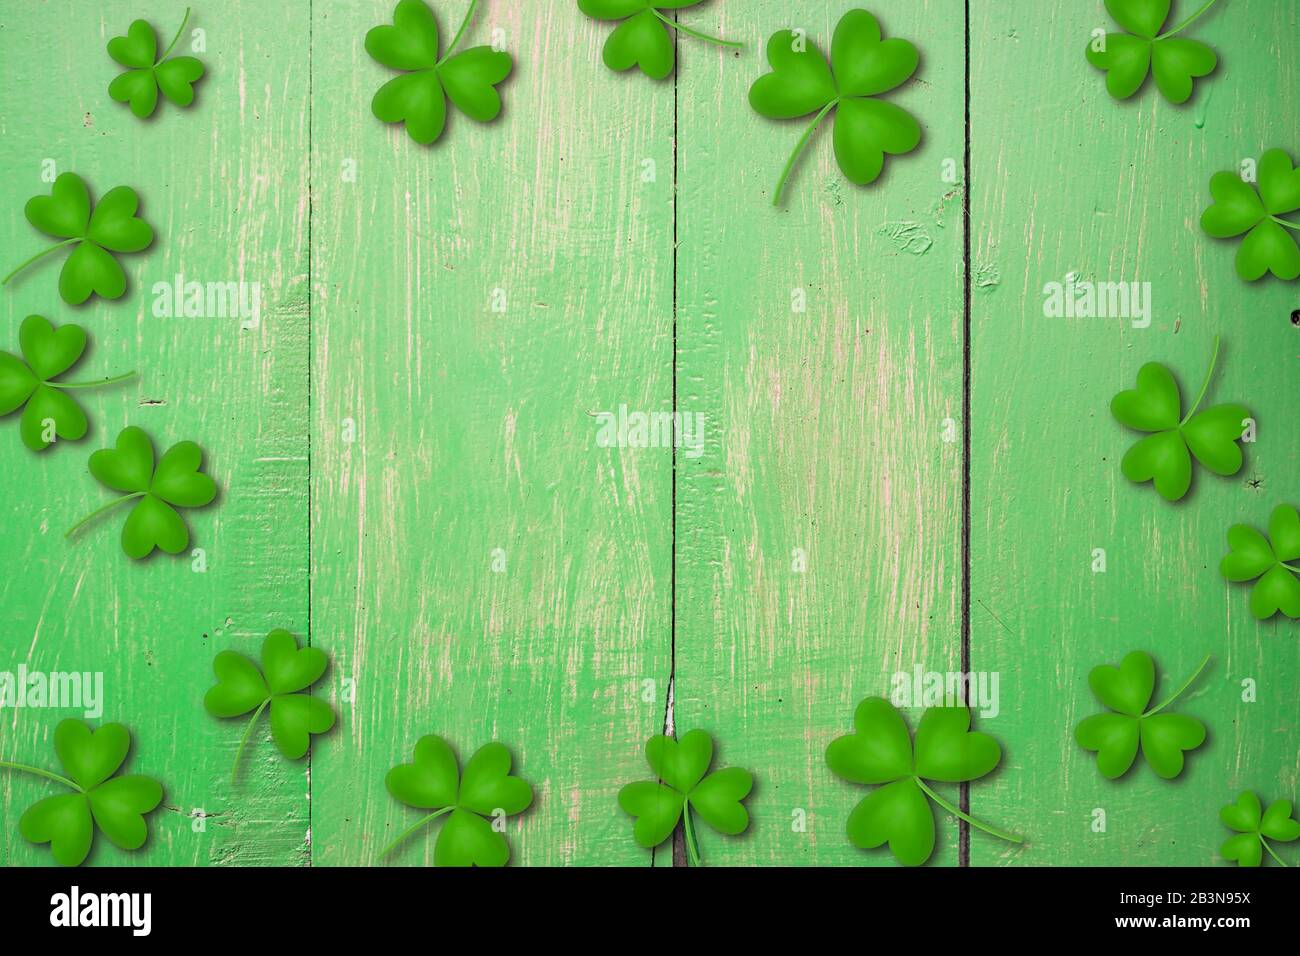 Shamrocks on green wooden table a symbol og St. Patricks Day. Bbanner with corner border of shamrocks.Textured pattern Stock Photo